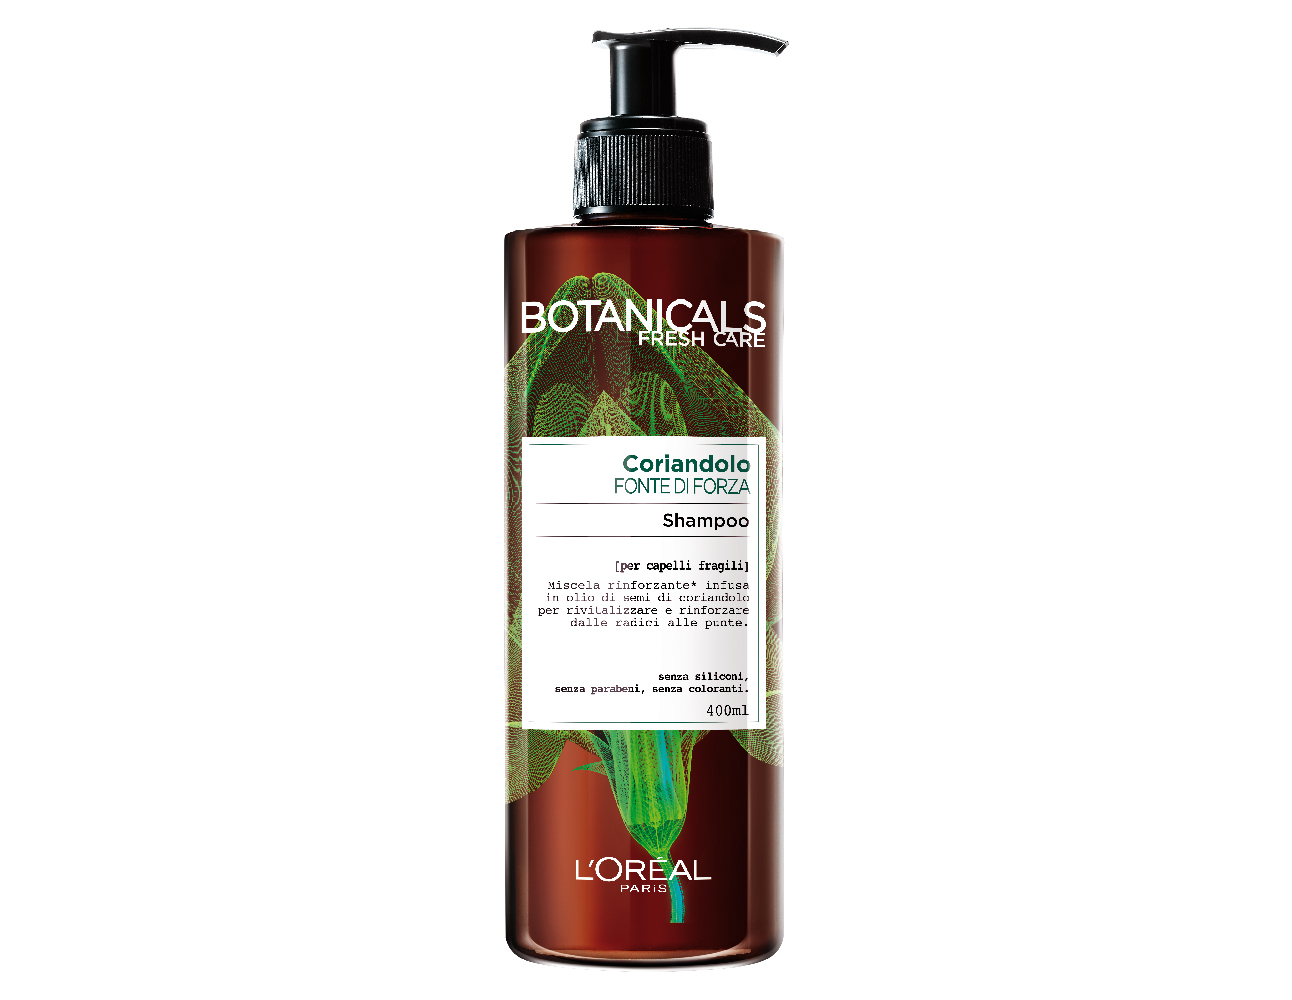 Image of Botanicals Fresh Care Shampoo Rinforzante Coriandolo 400ml